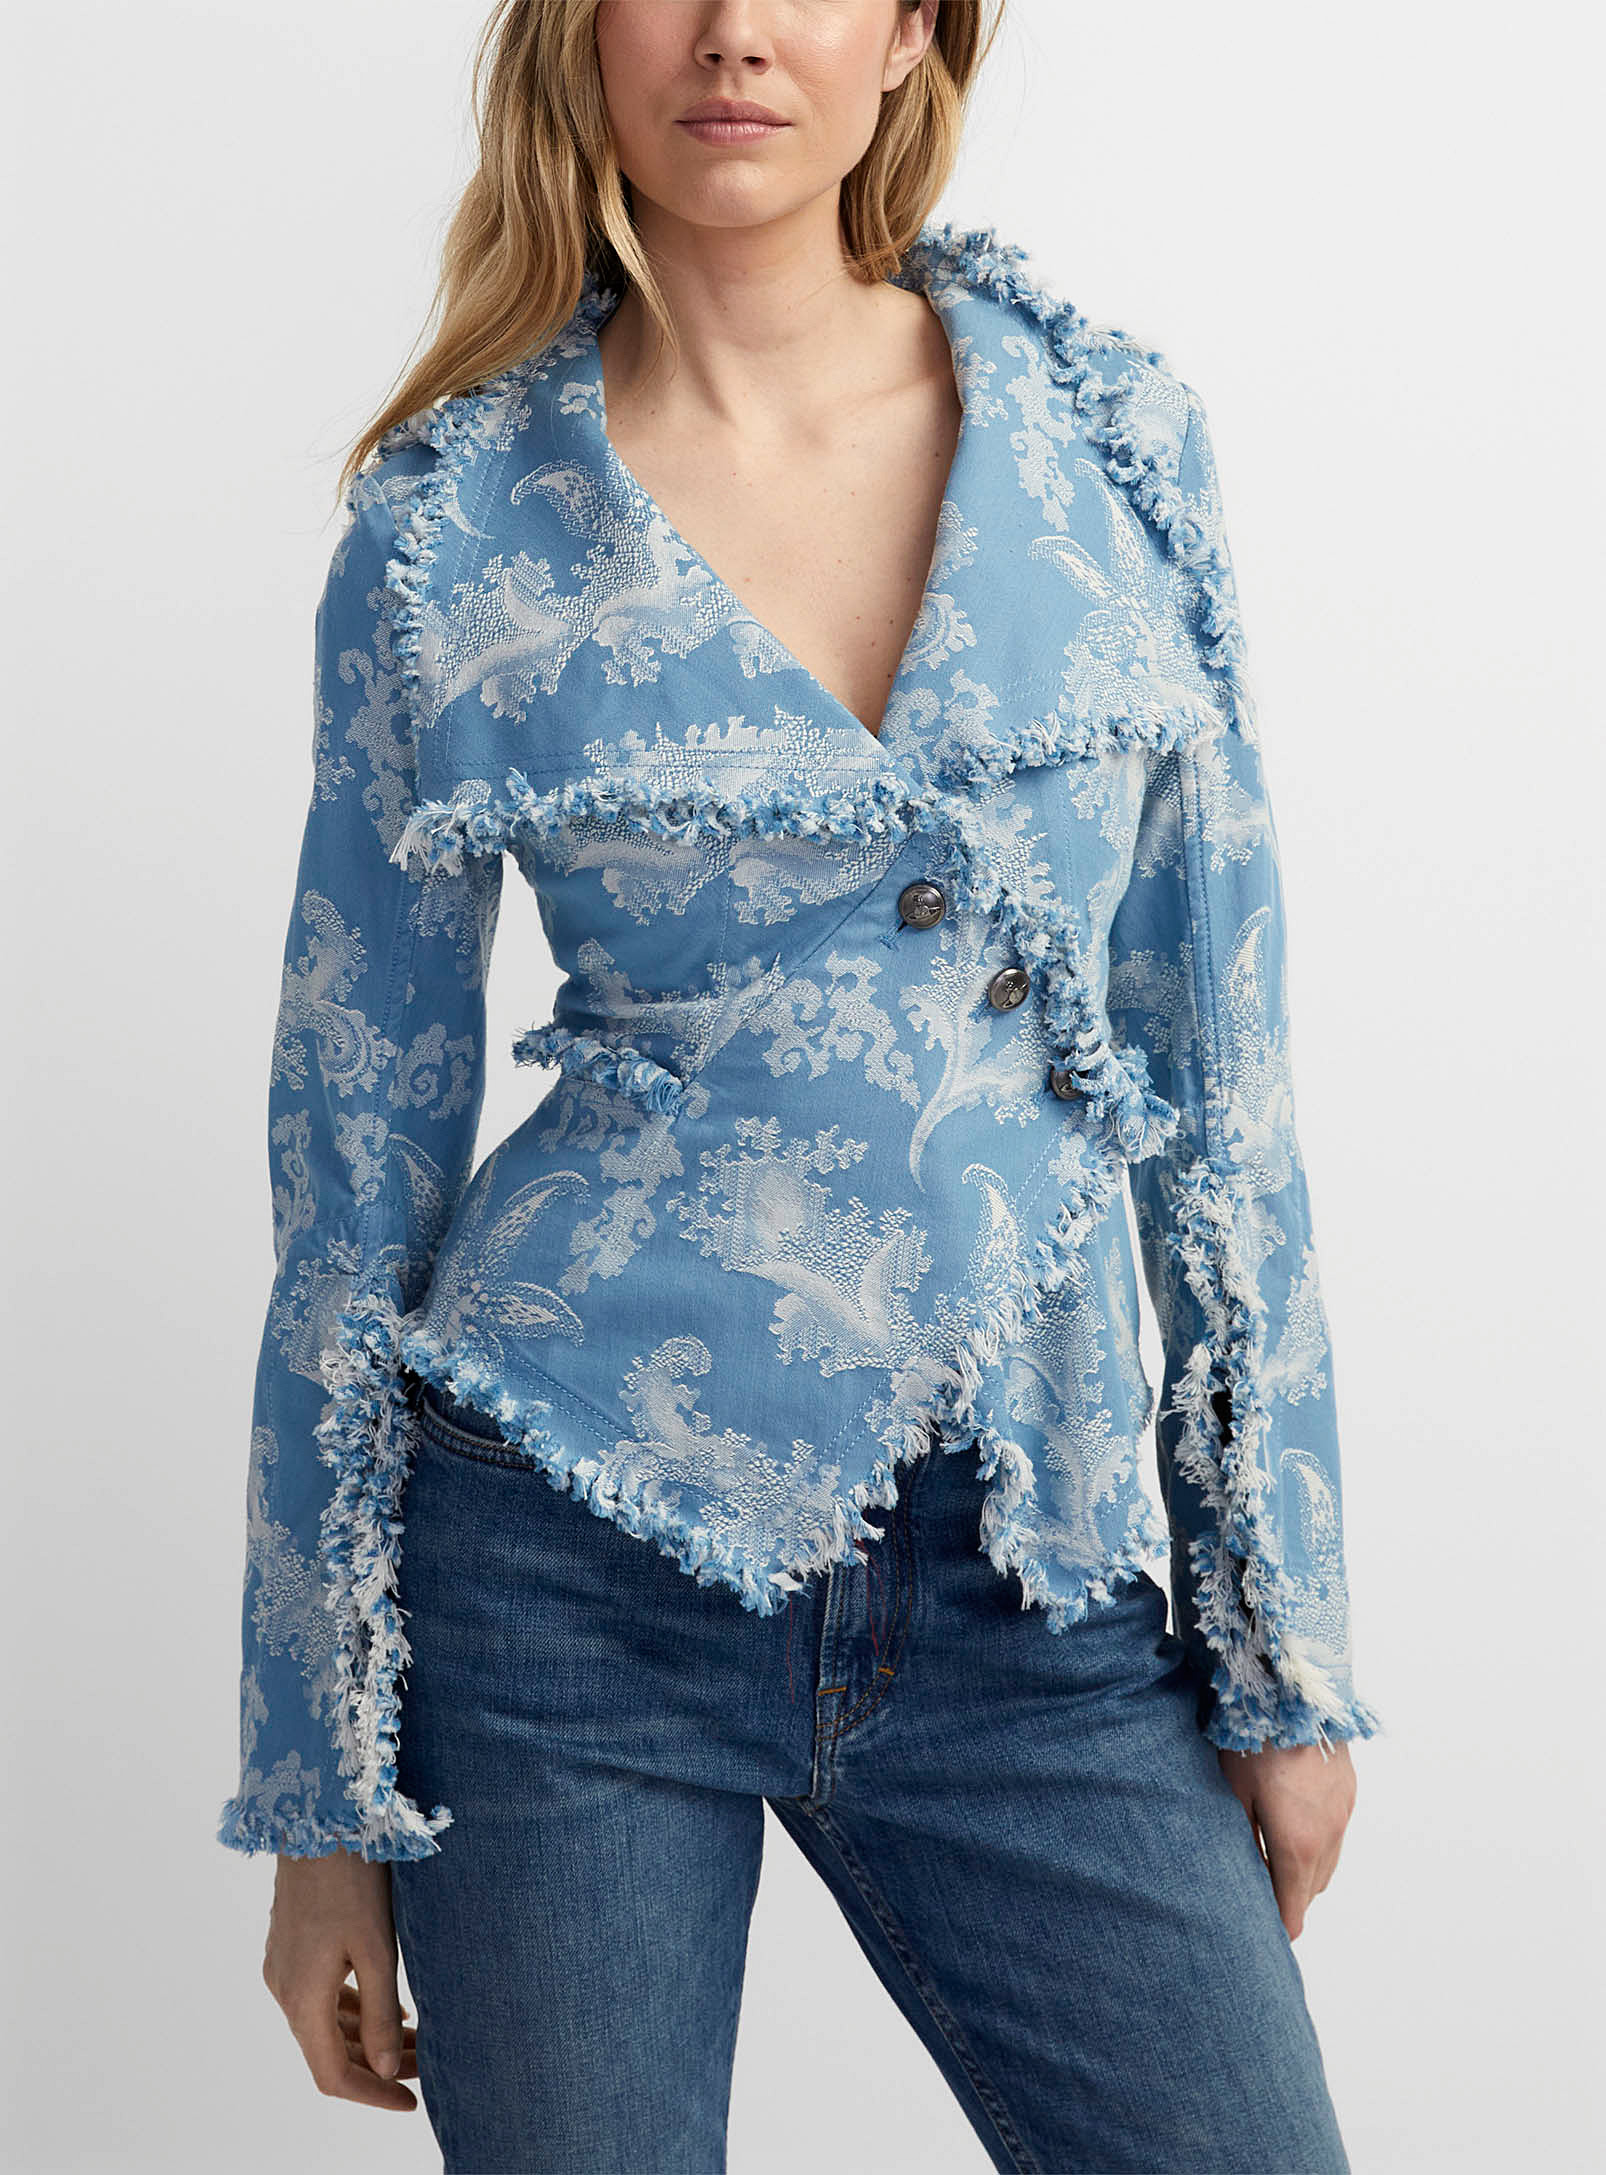 Vivienne Westwood - Women's Worth More asymmetrical Blazer Jacket